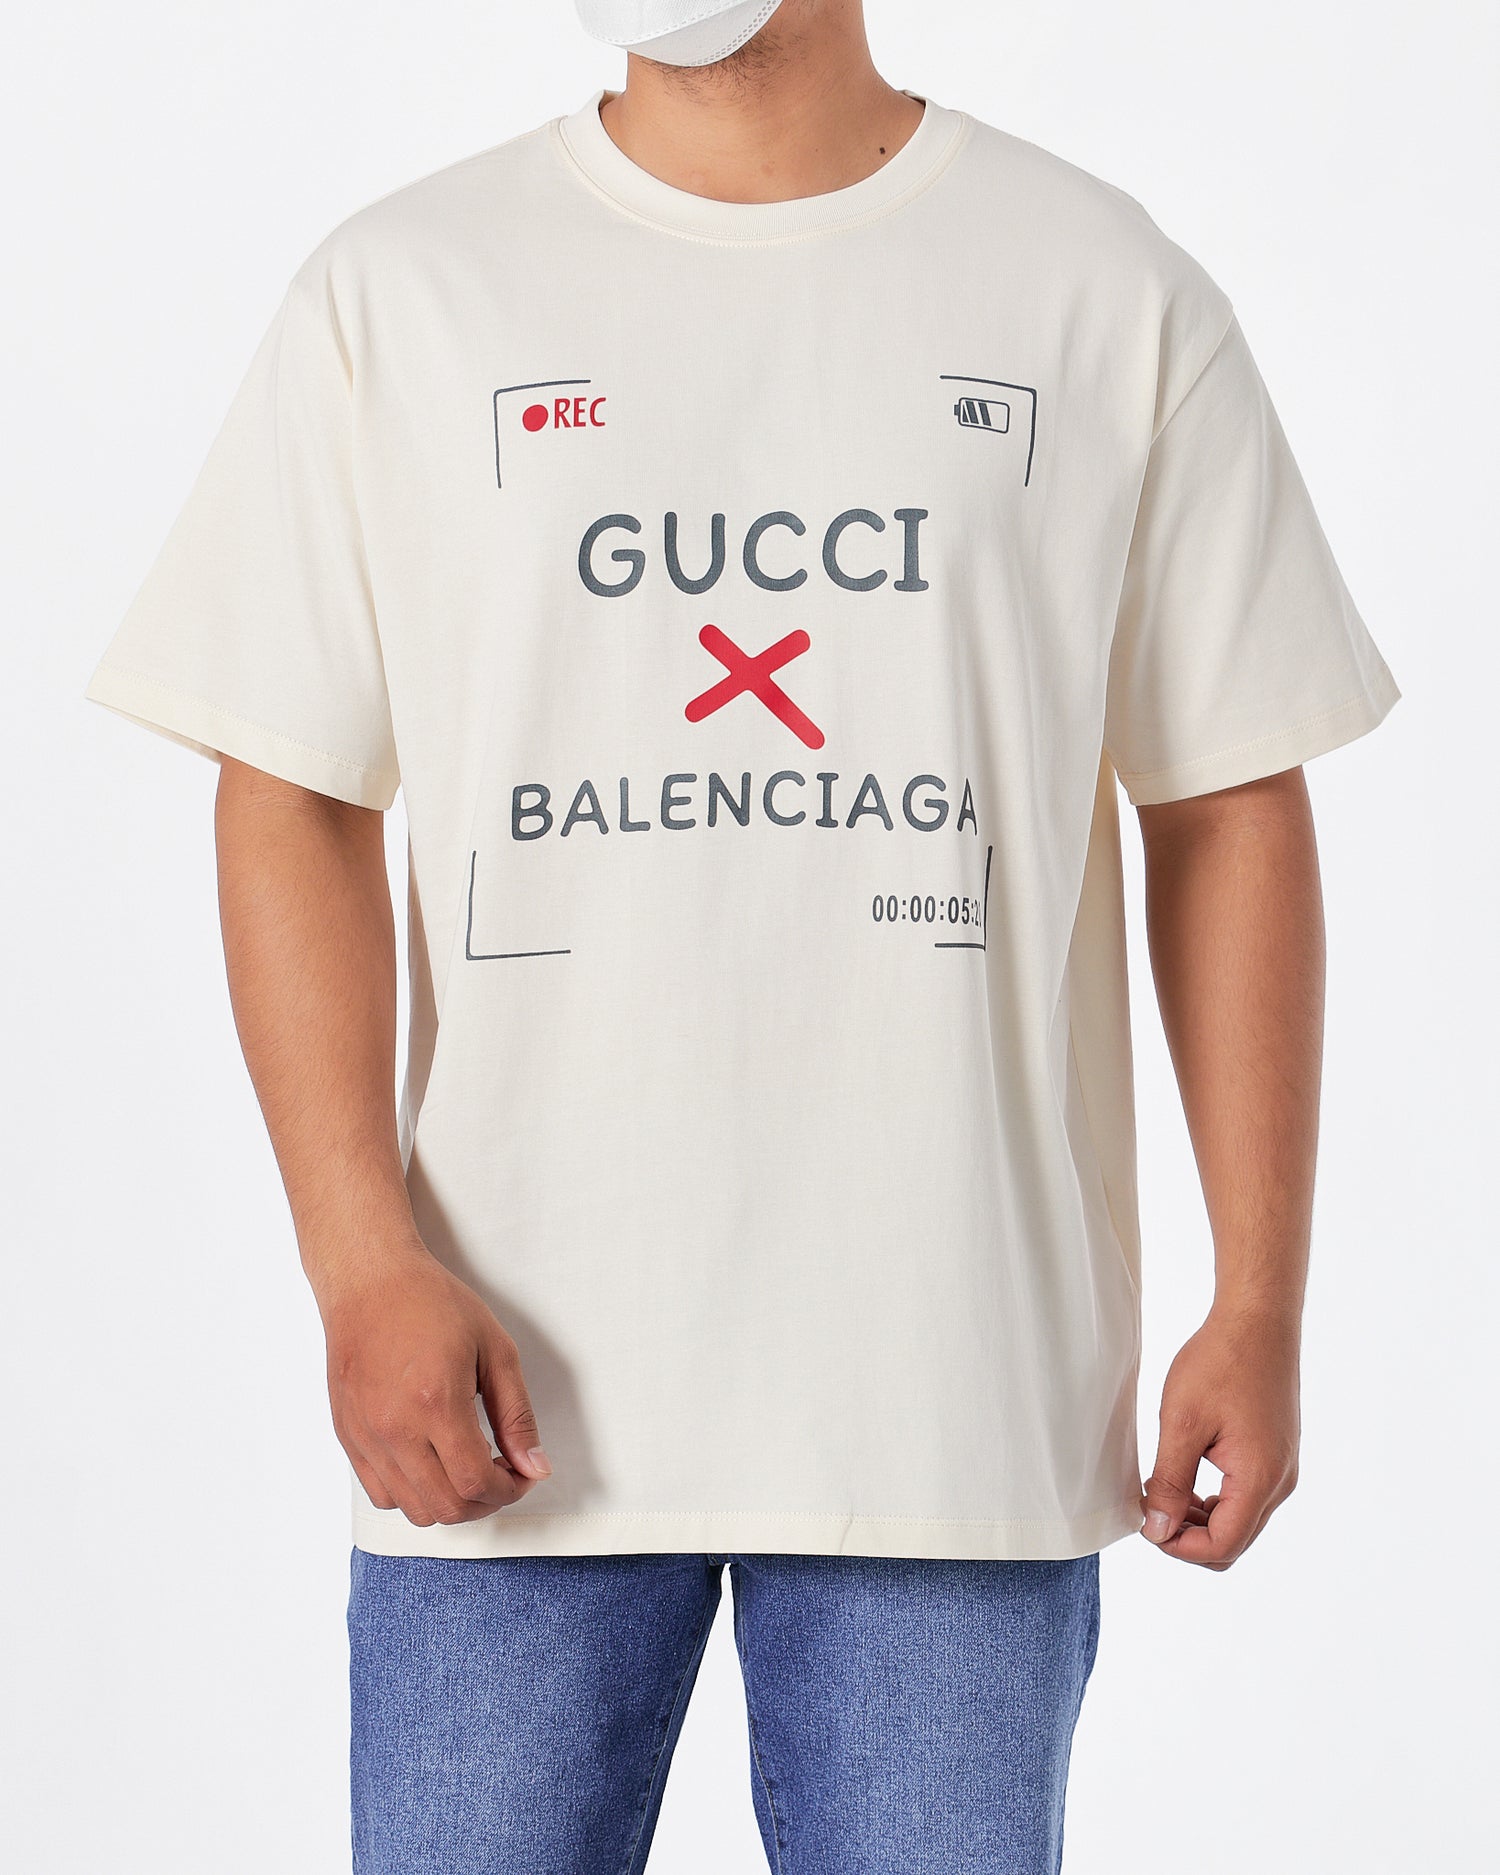 GUC x BAL Men White T-Shirt 20.90